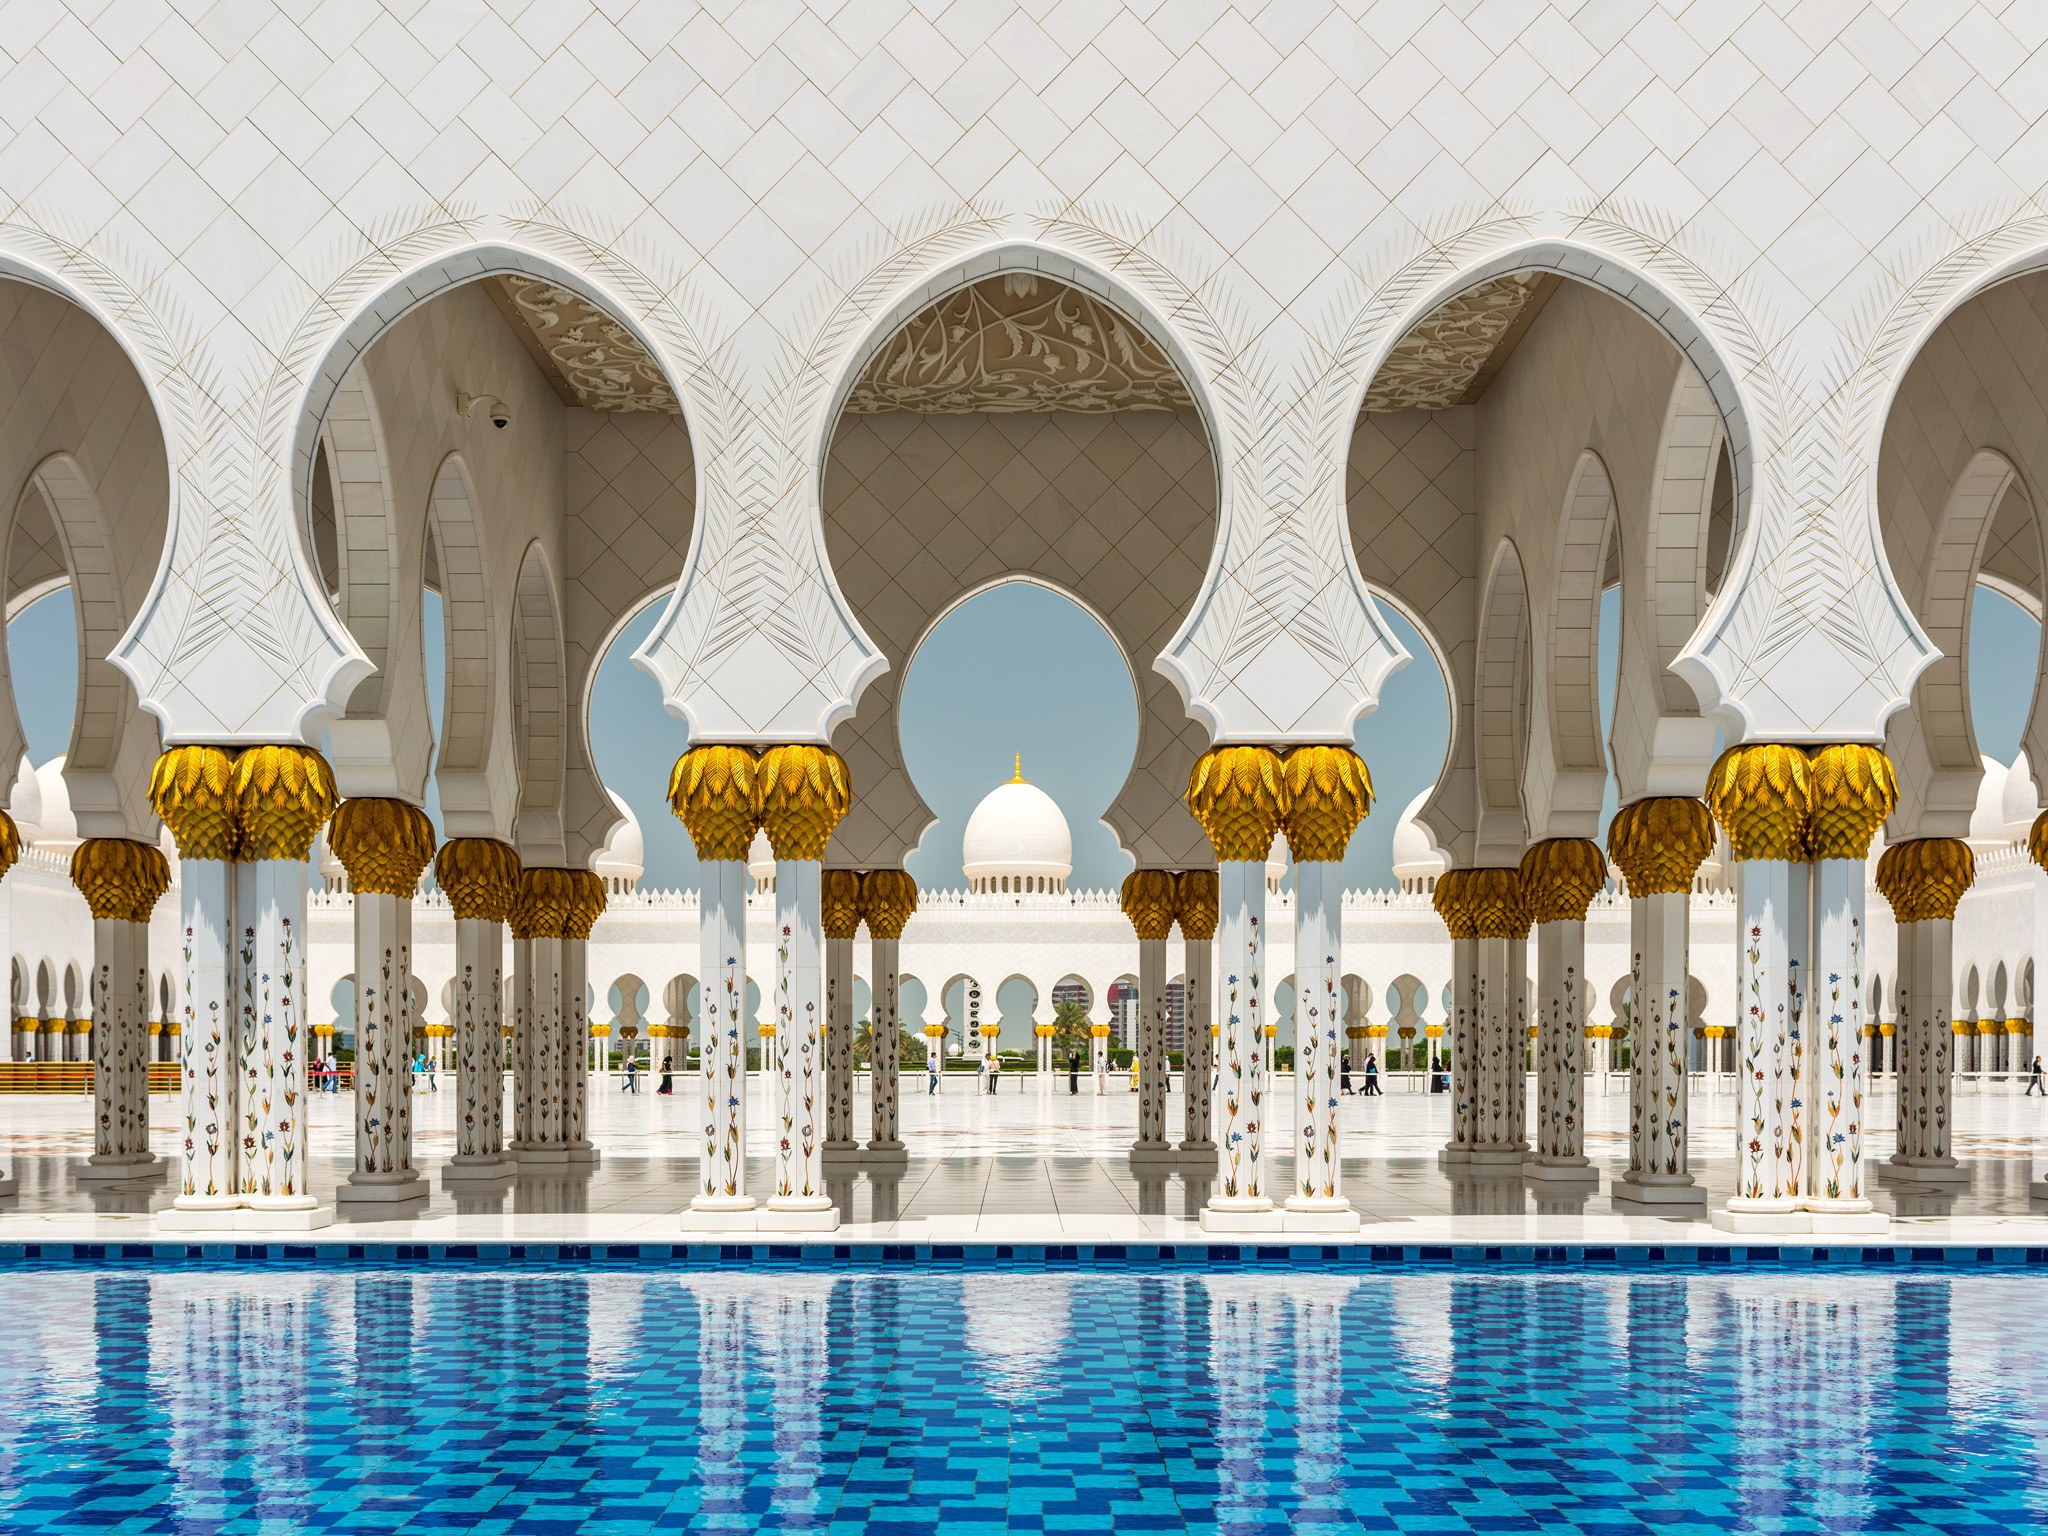 Мечети - настоящие шедевры архитектуры